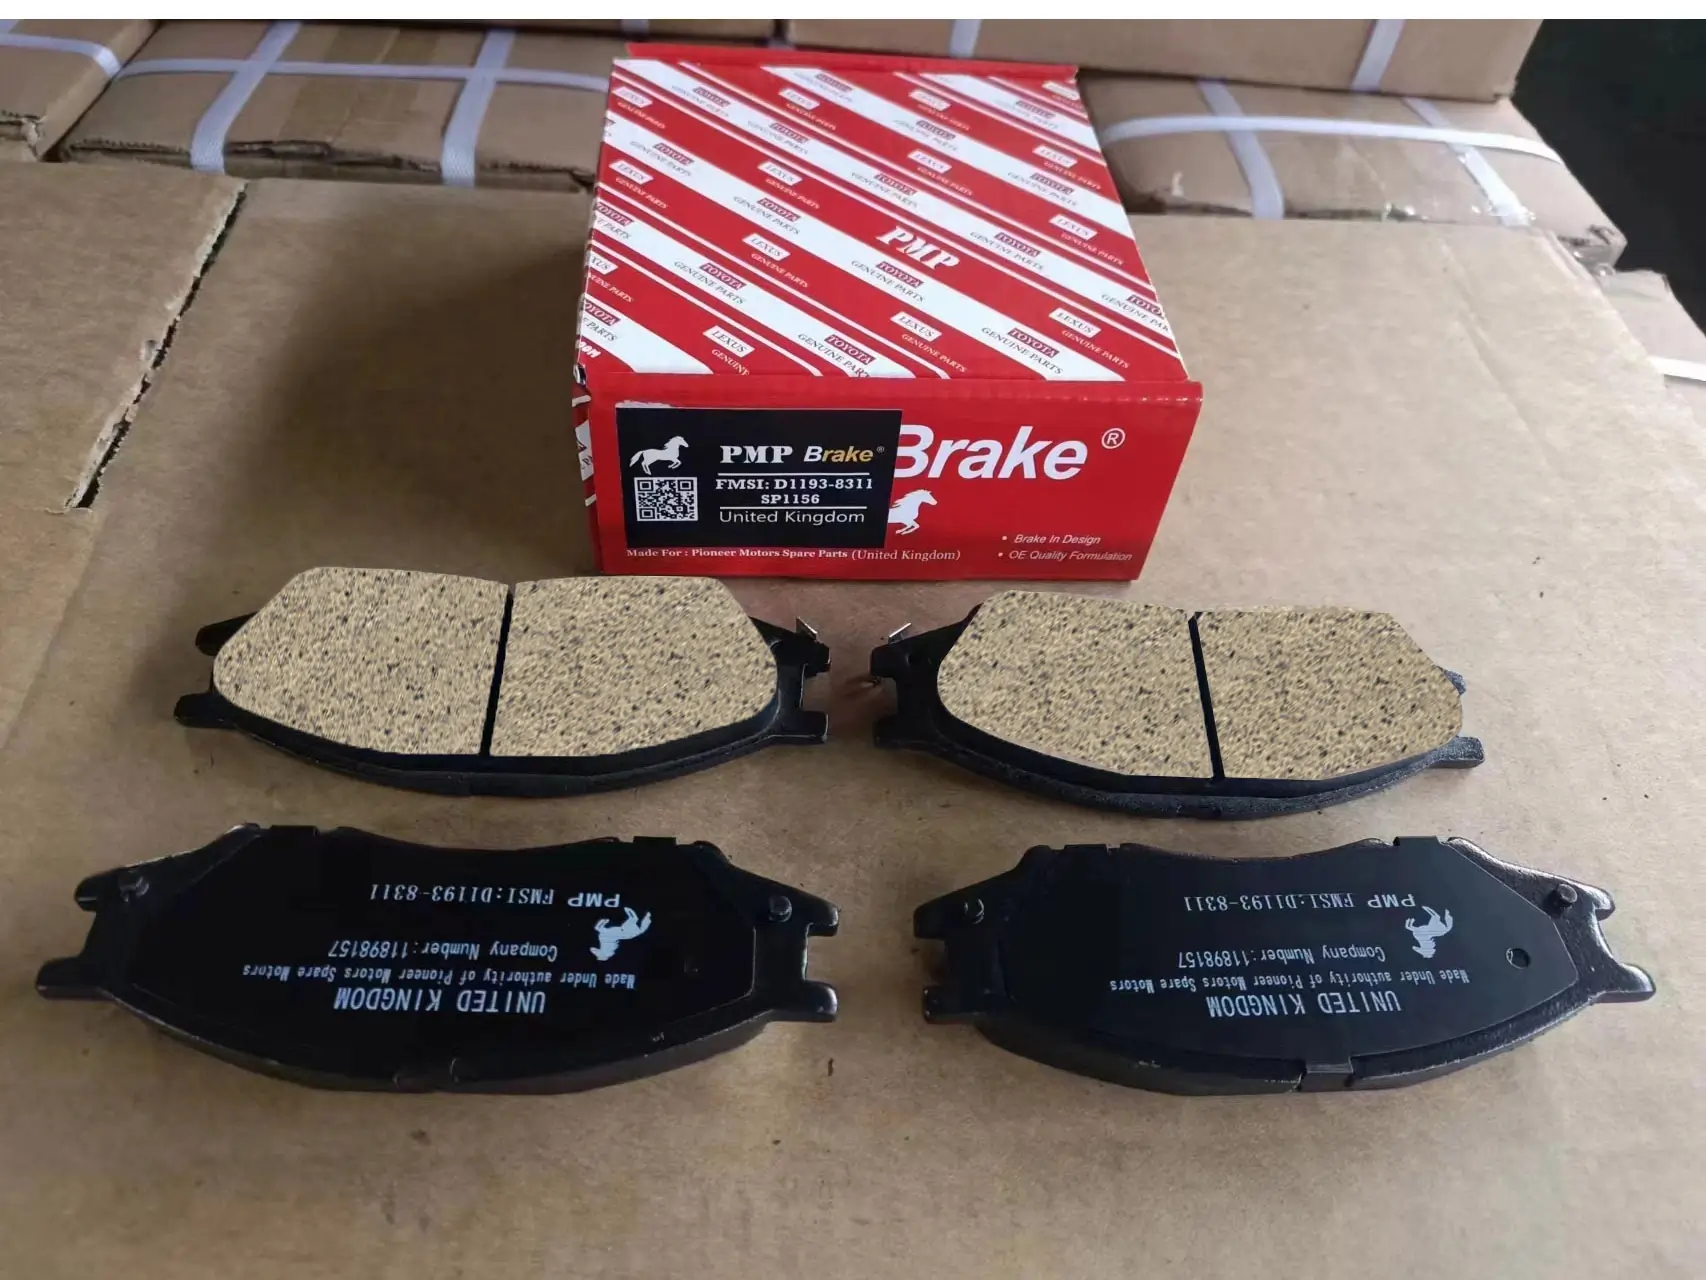 Durable ceramic brake pads for Toyota Corolla.